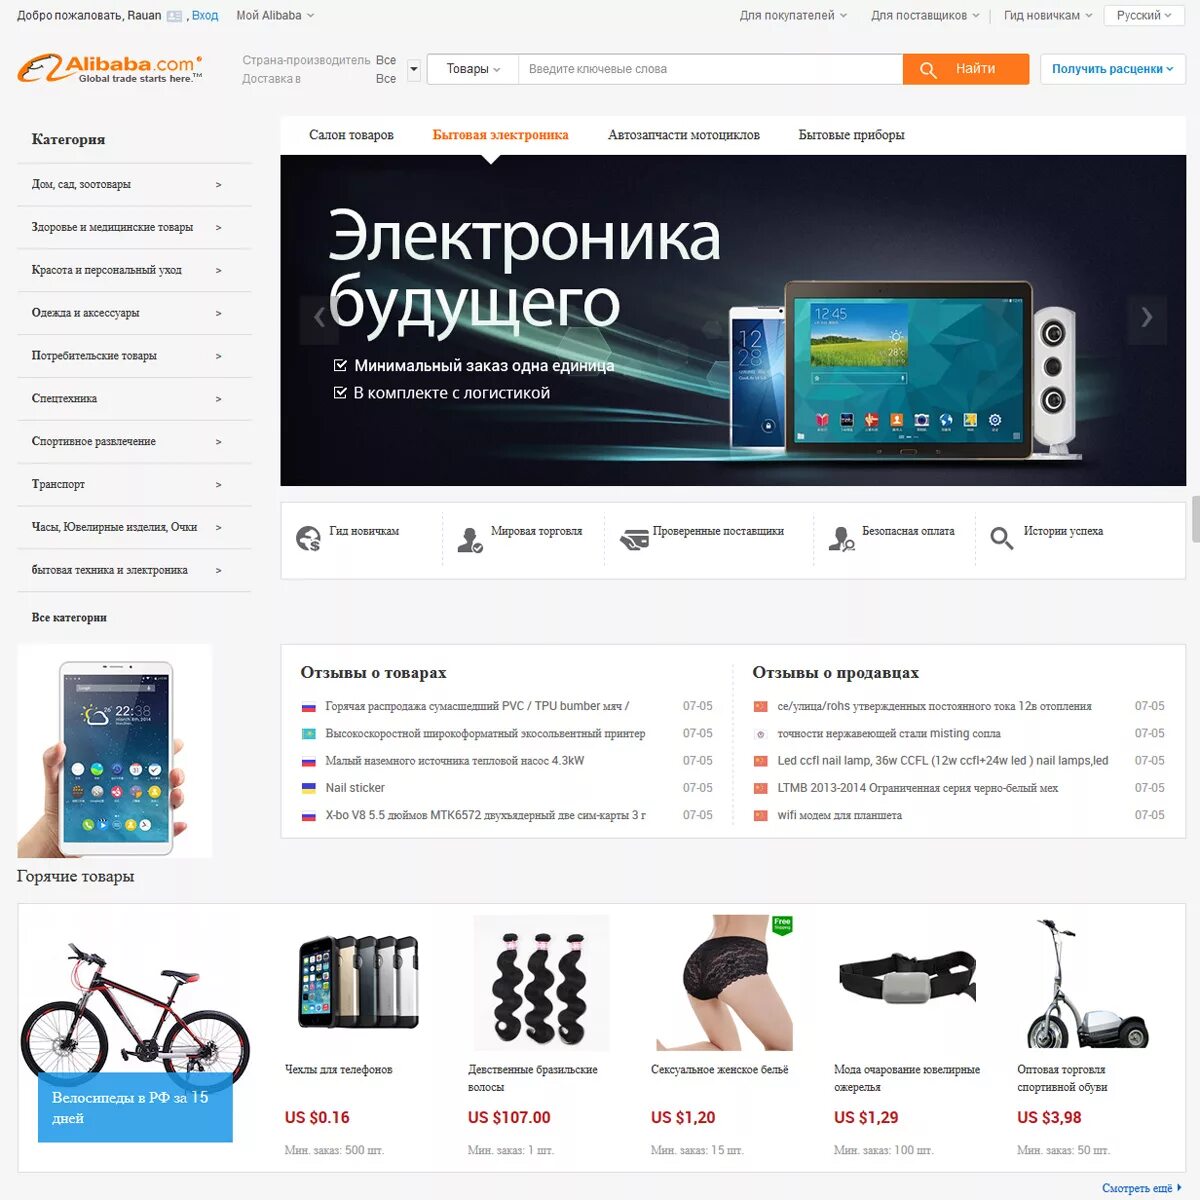 Ооо алибаба ком. Alibaba интернет магазин. Алибаба com интернет магазин. Китайские интернет магазины. Alibaba на русском интернет магазин каталог.